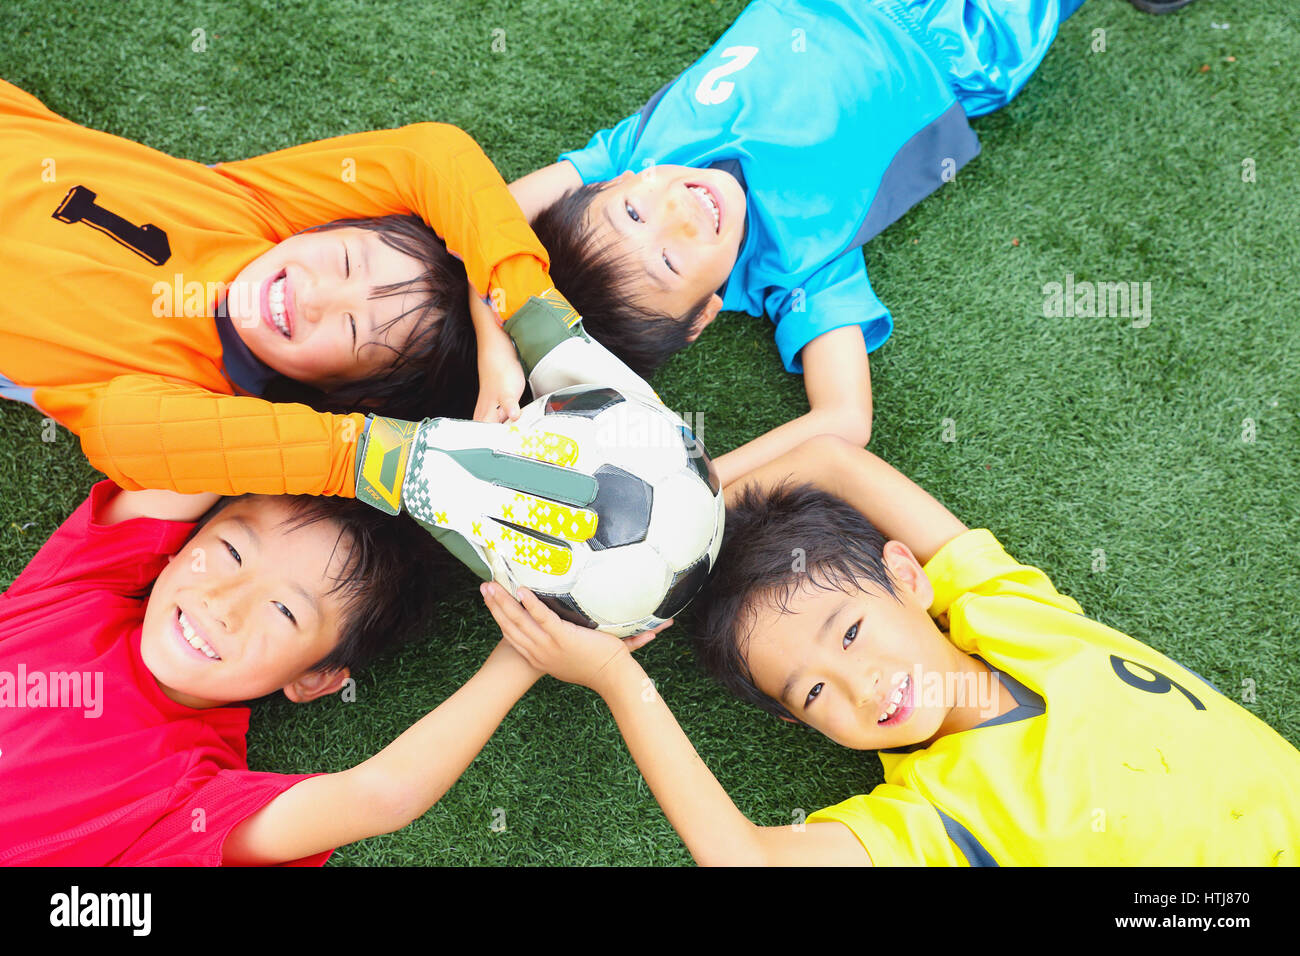 Japanese kids playing soccer Stock Photo